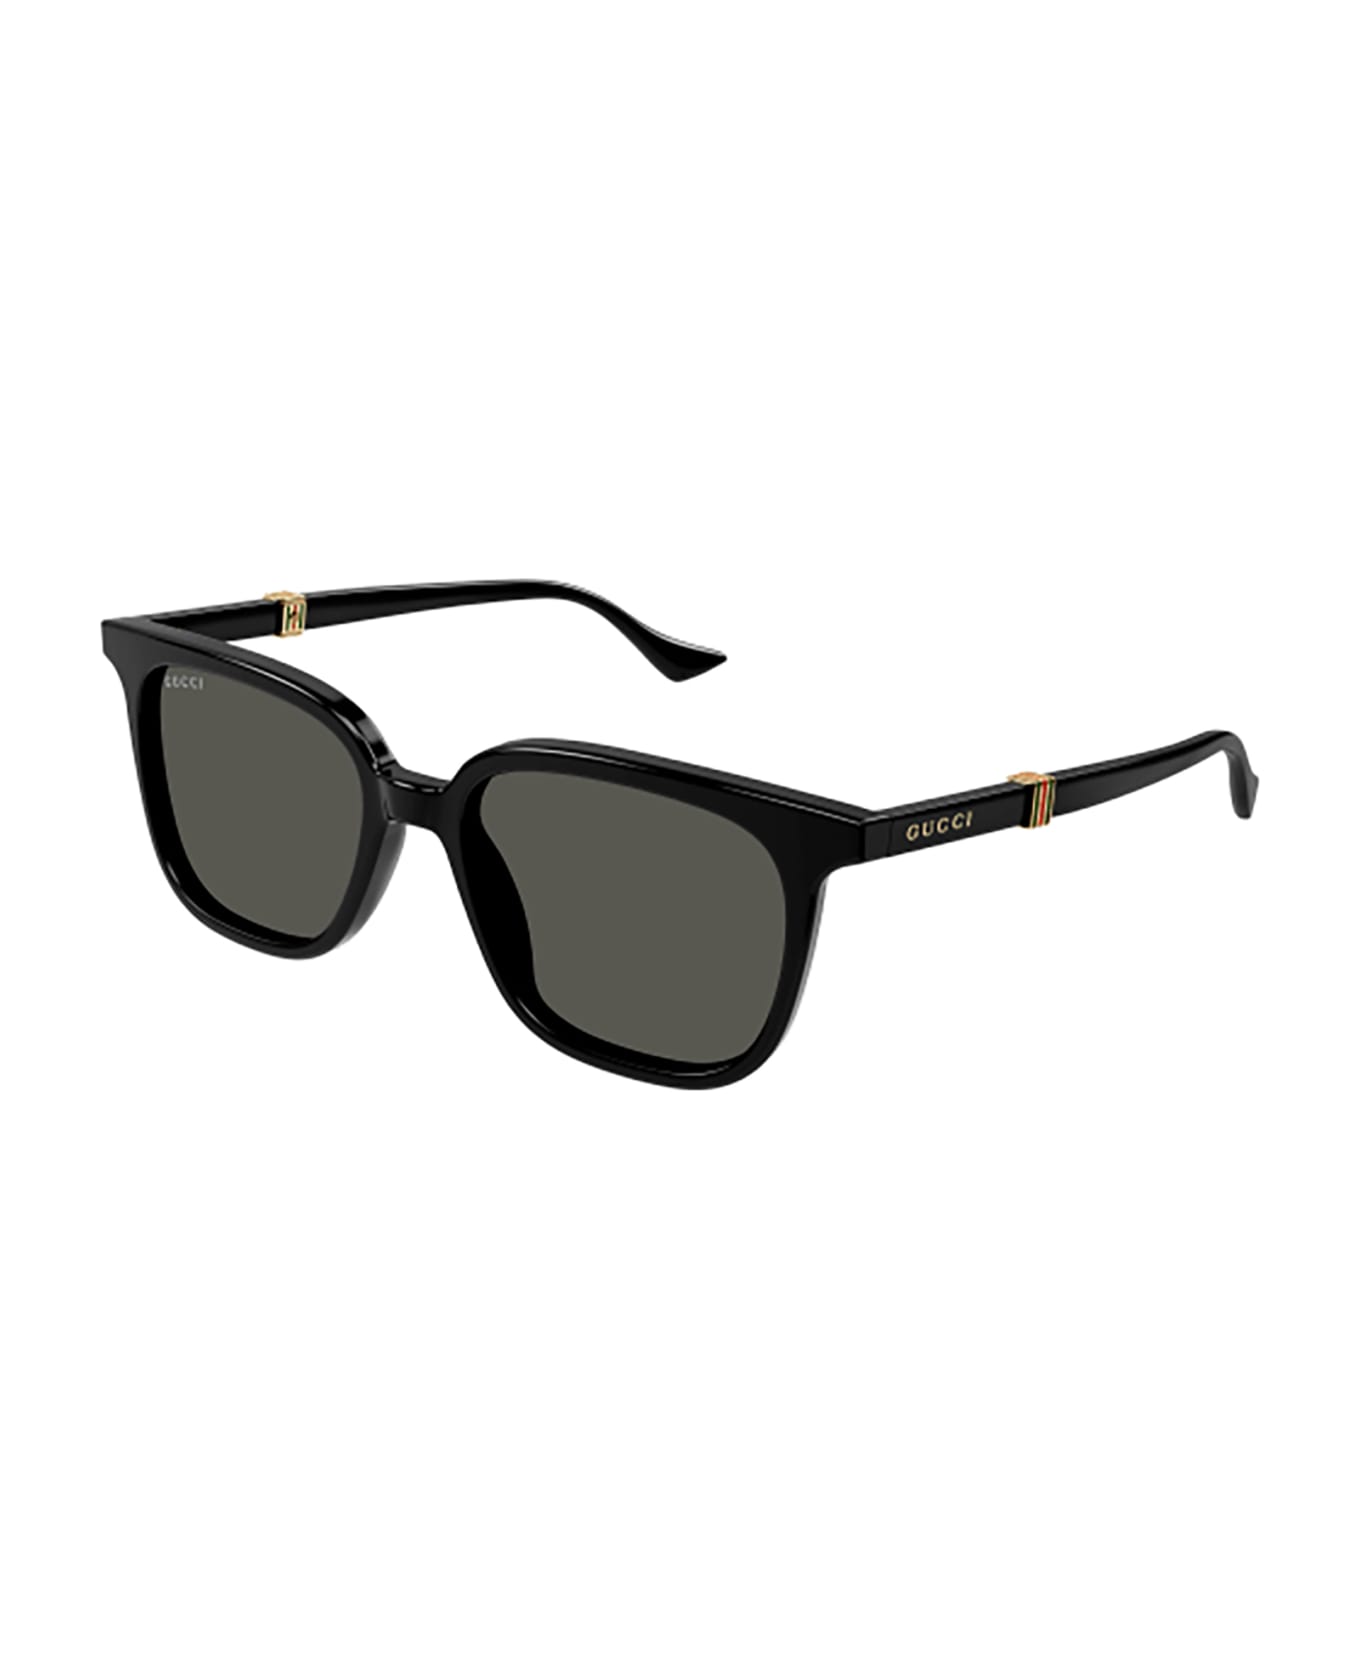 Gucci Eyewear GG1493S Sunglasses - Black Black Grey